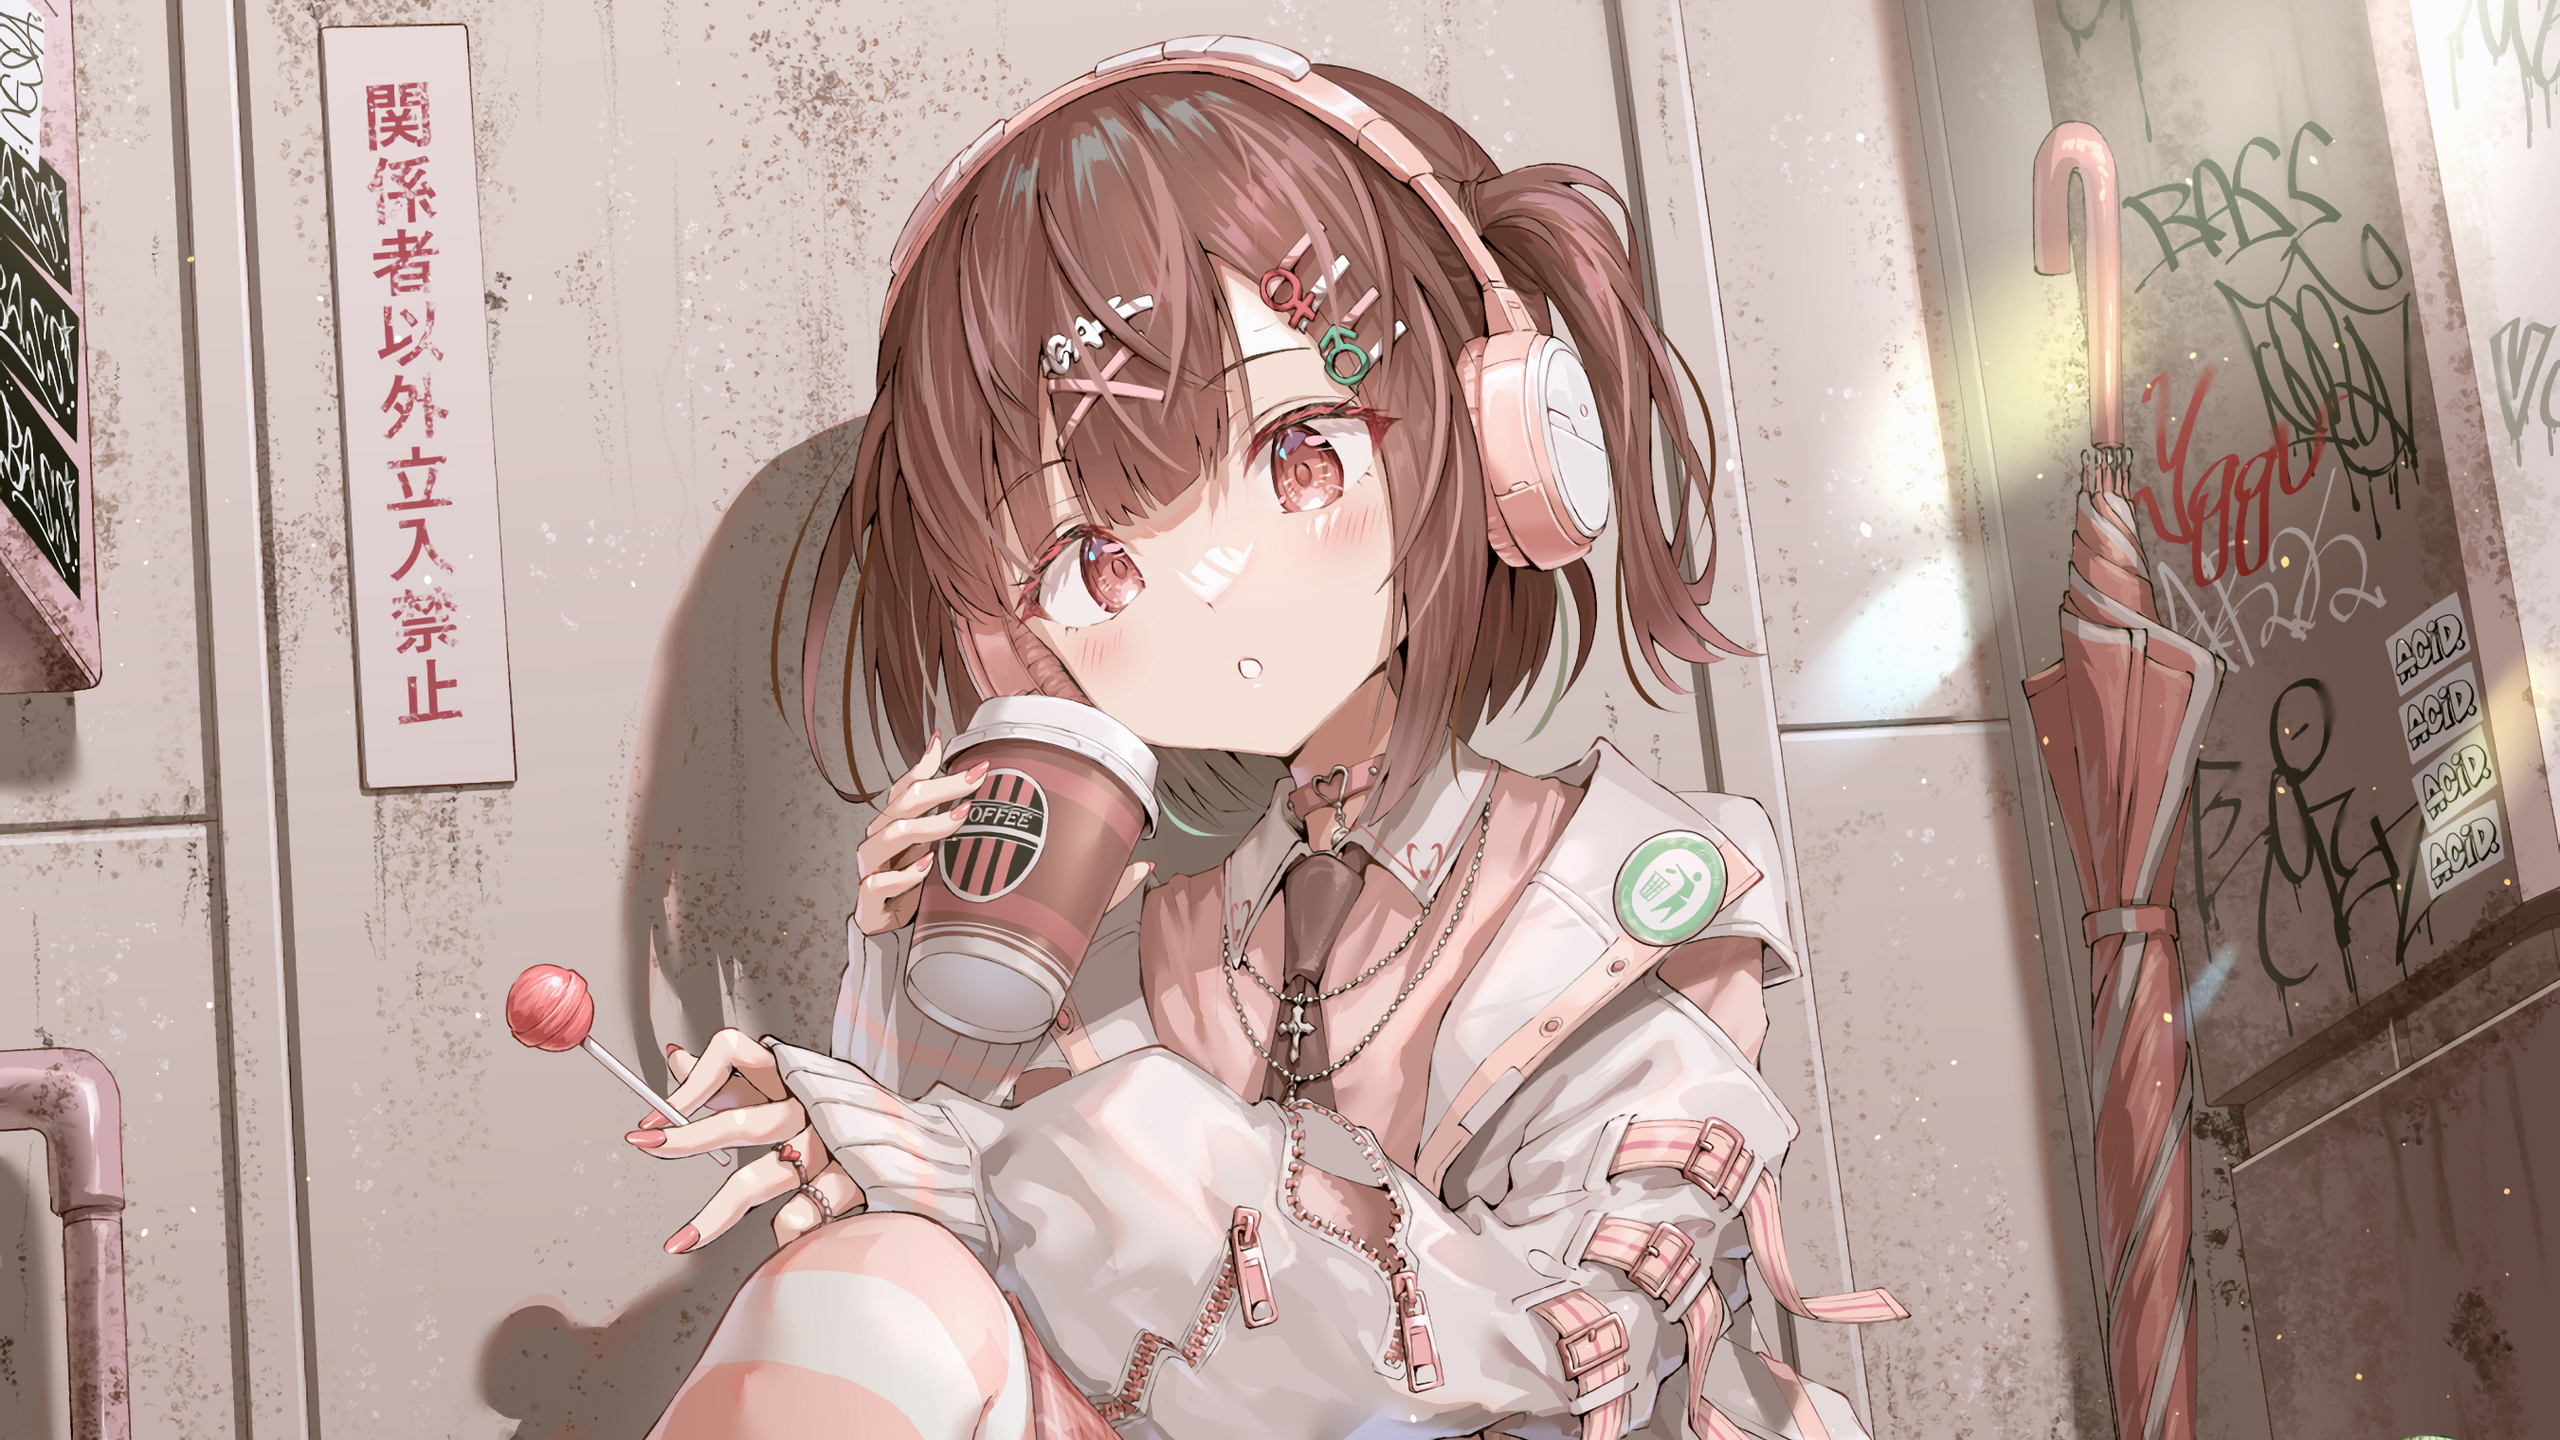 Anime Girls Headphones Coffee Umbrella Artwork Tie Lollipop Drink Blushing Short Hair Looking At Vie 2560x1440